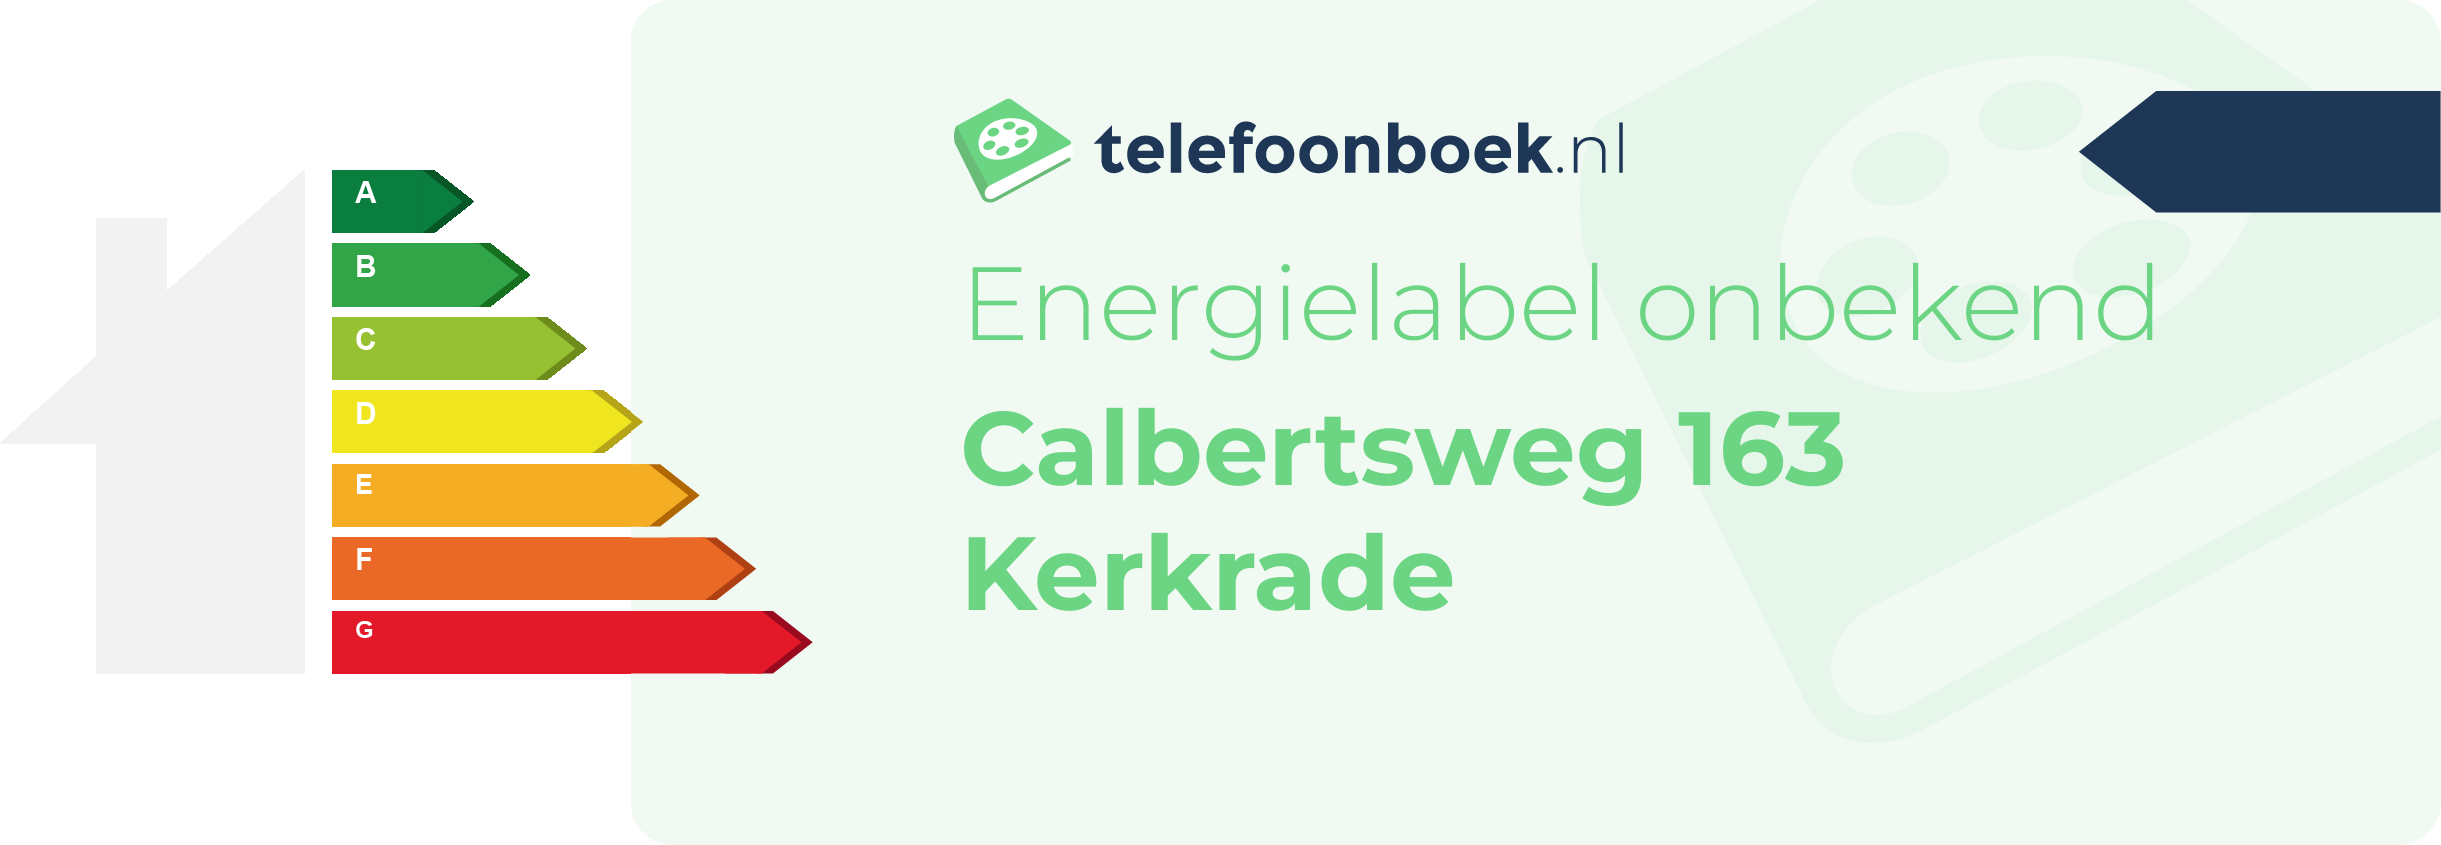 Energielabel Calbertsweg 163 Kerkrade